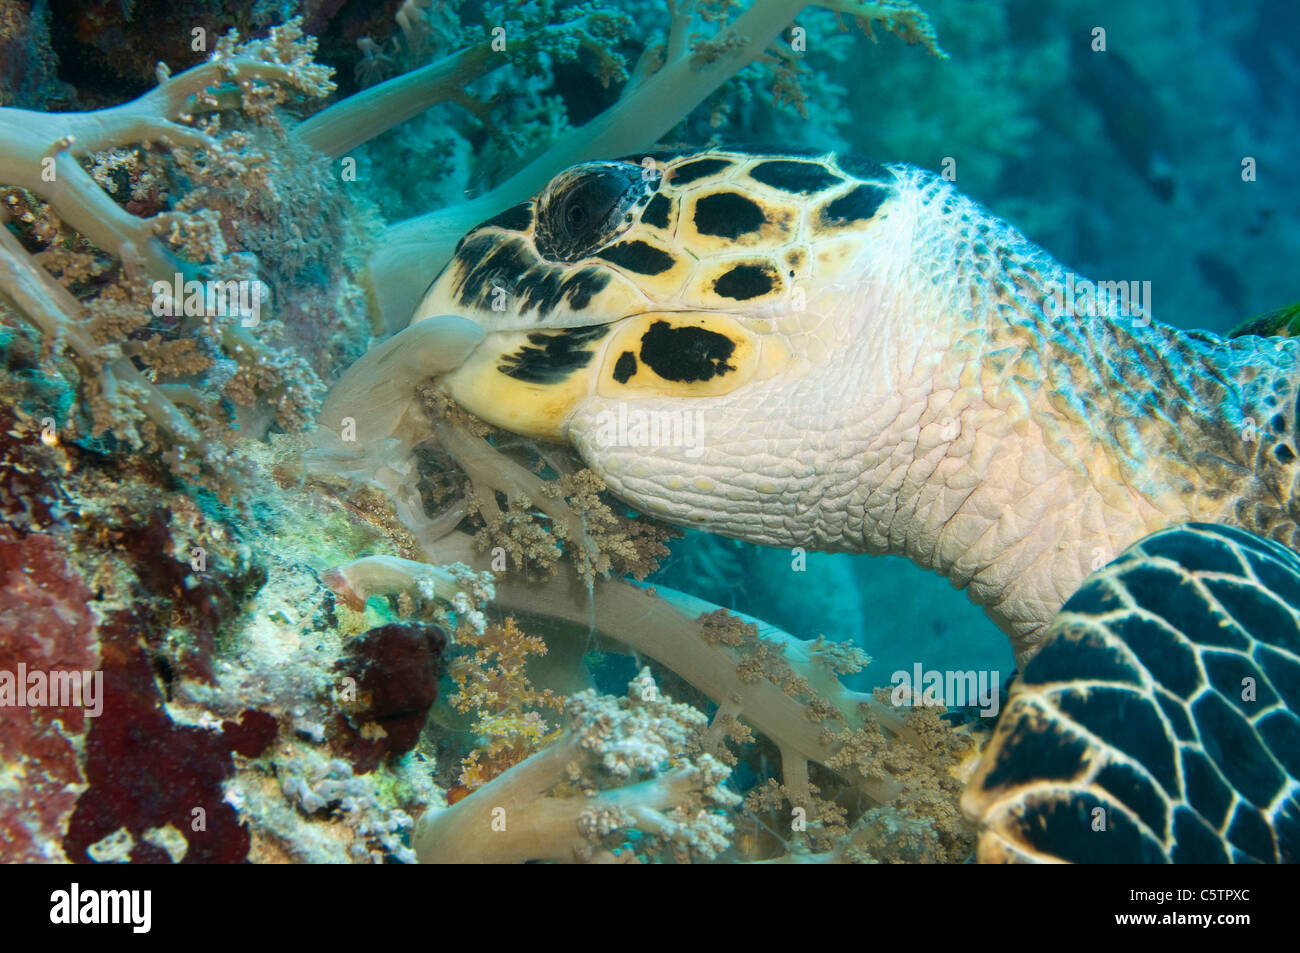 Egitto, Mar Rosso, tartaruga embricata (Eretmochelys imbricata) mangiare coralli molli, close-up Foto Stock